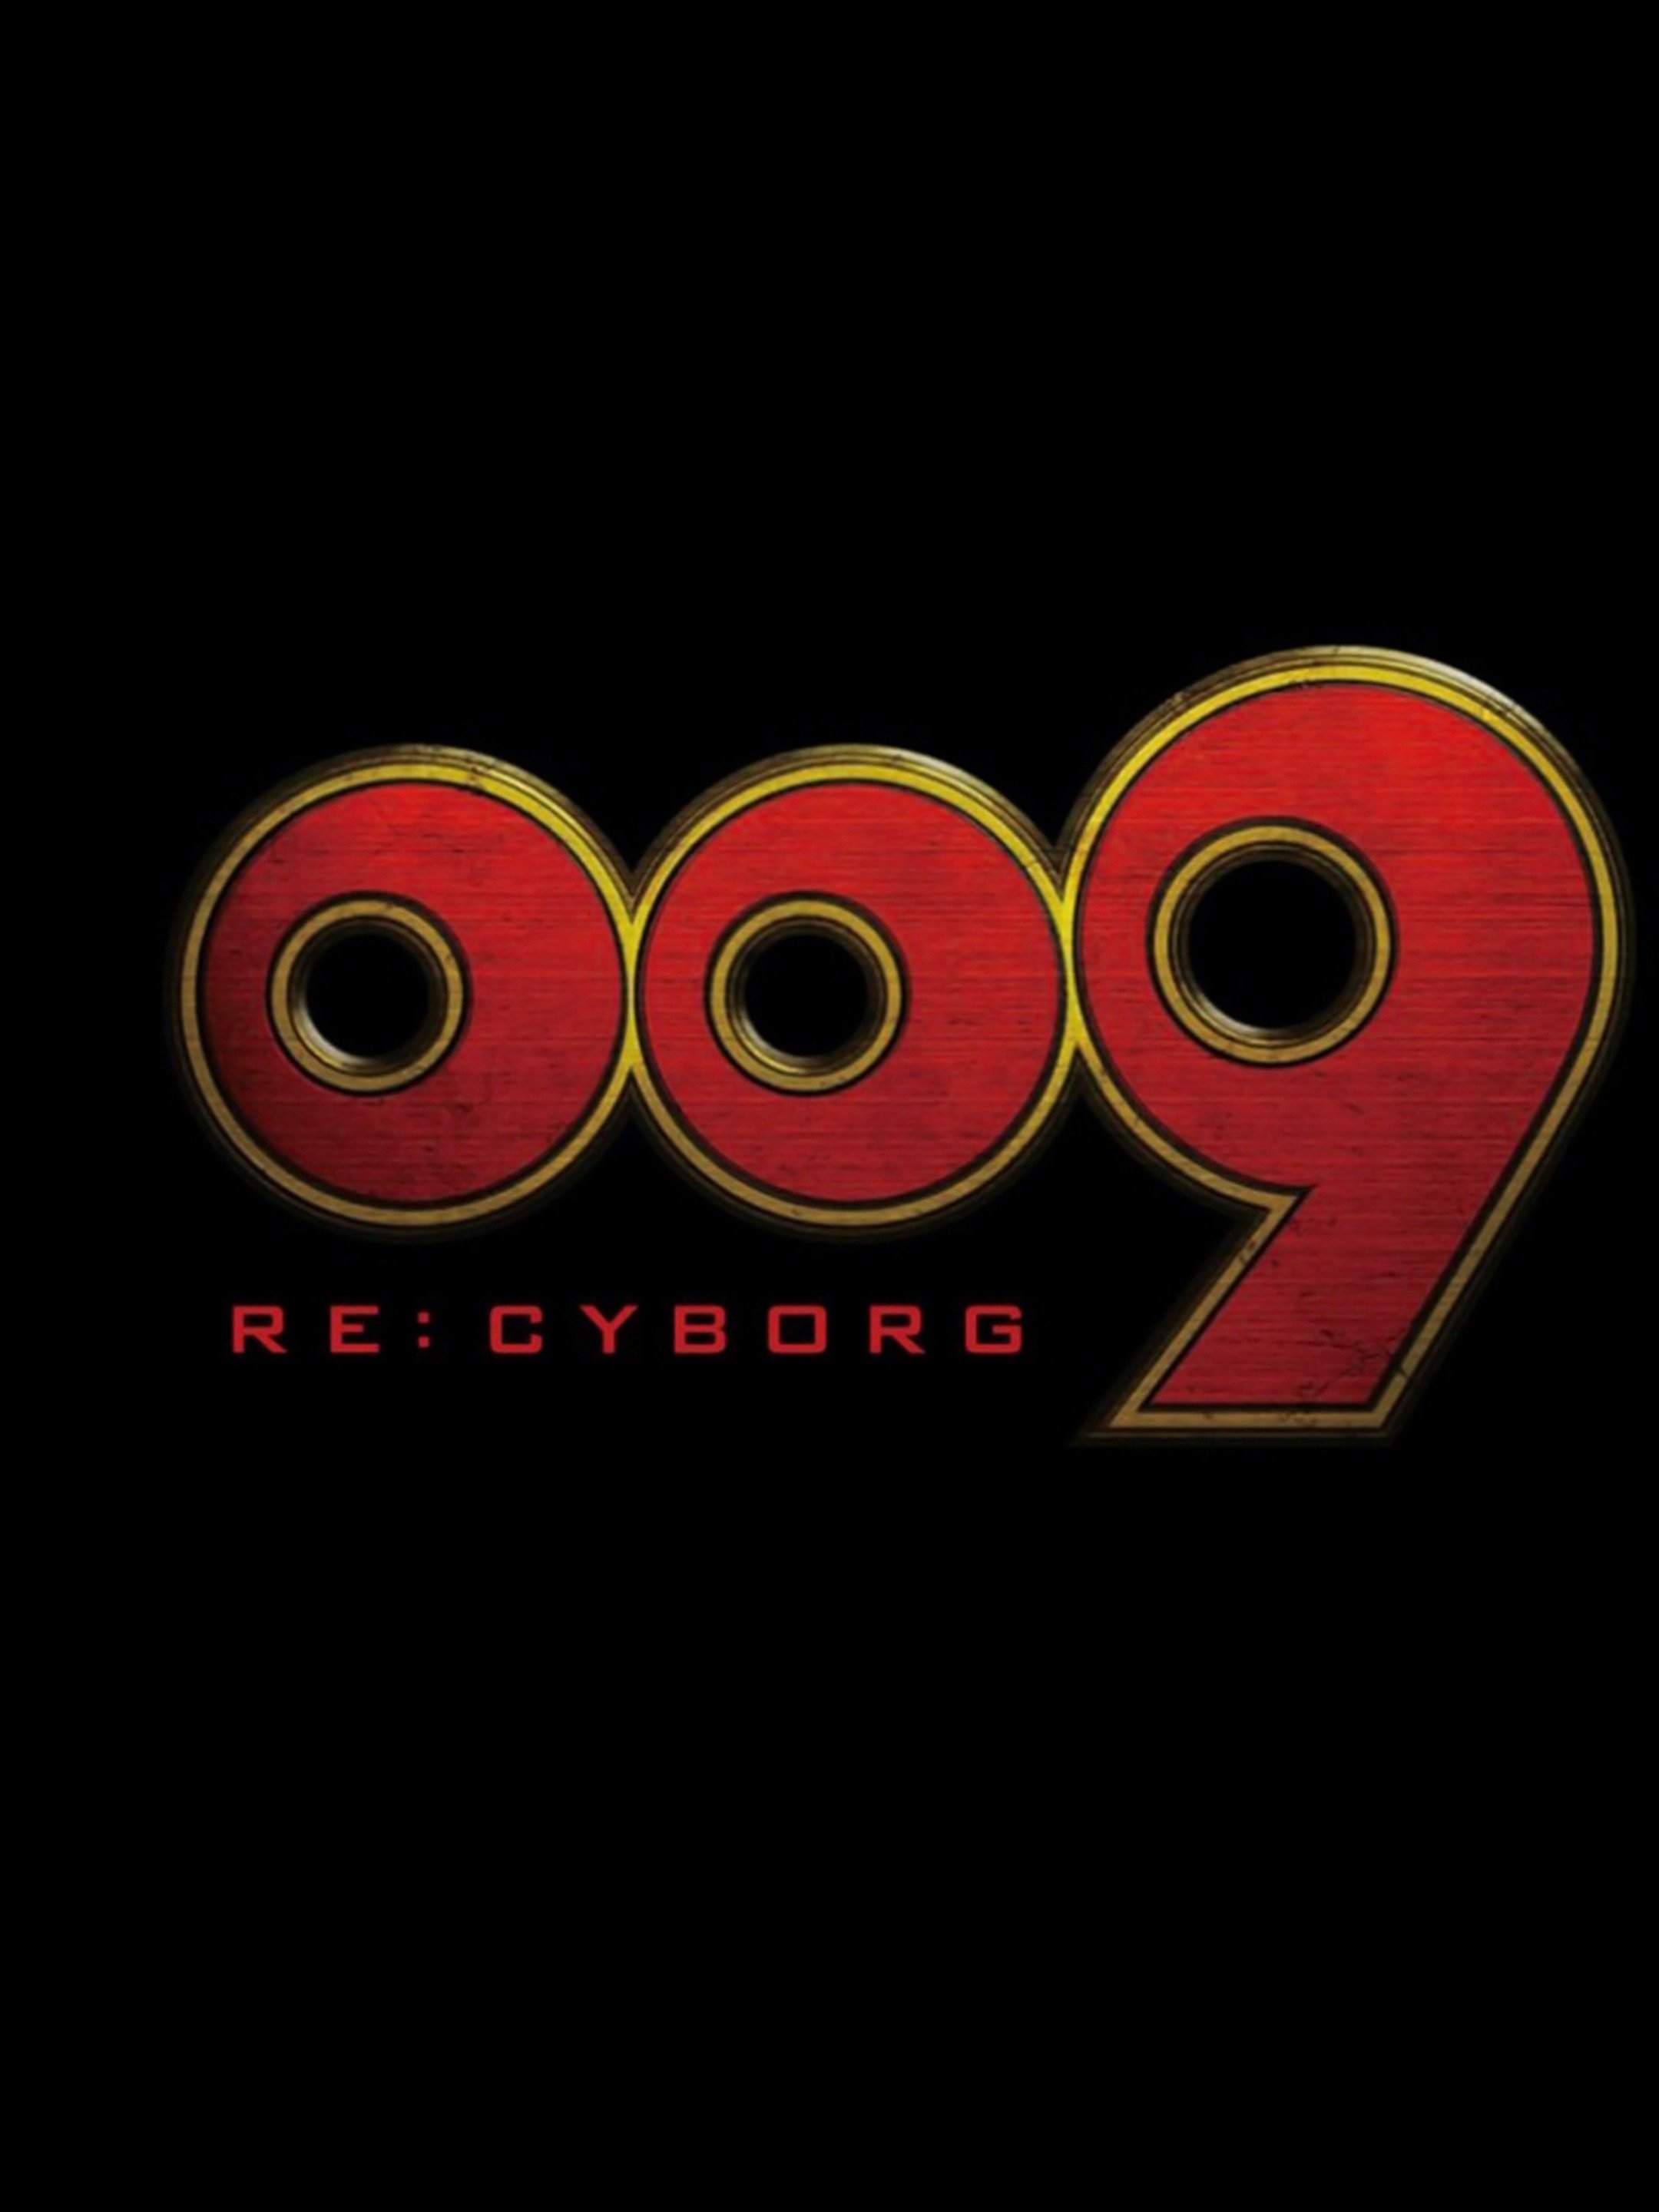 download 09 re cyborg